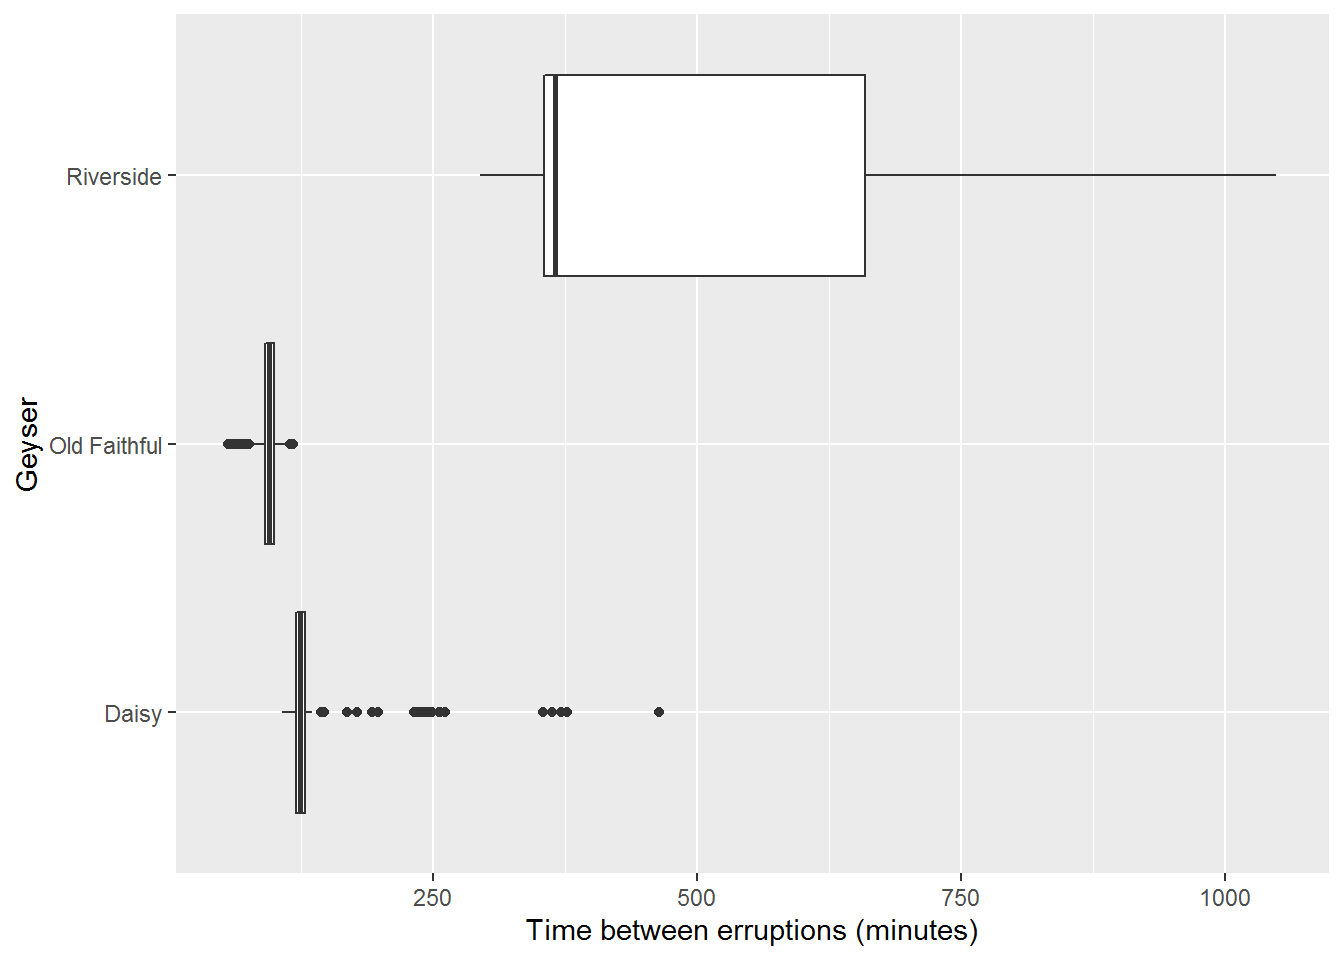 Box Plot Comparing Erruption Times of Geysers